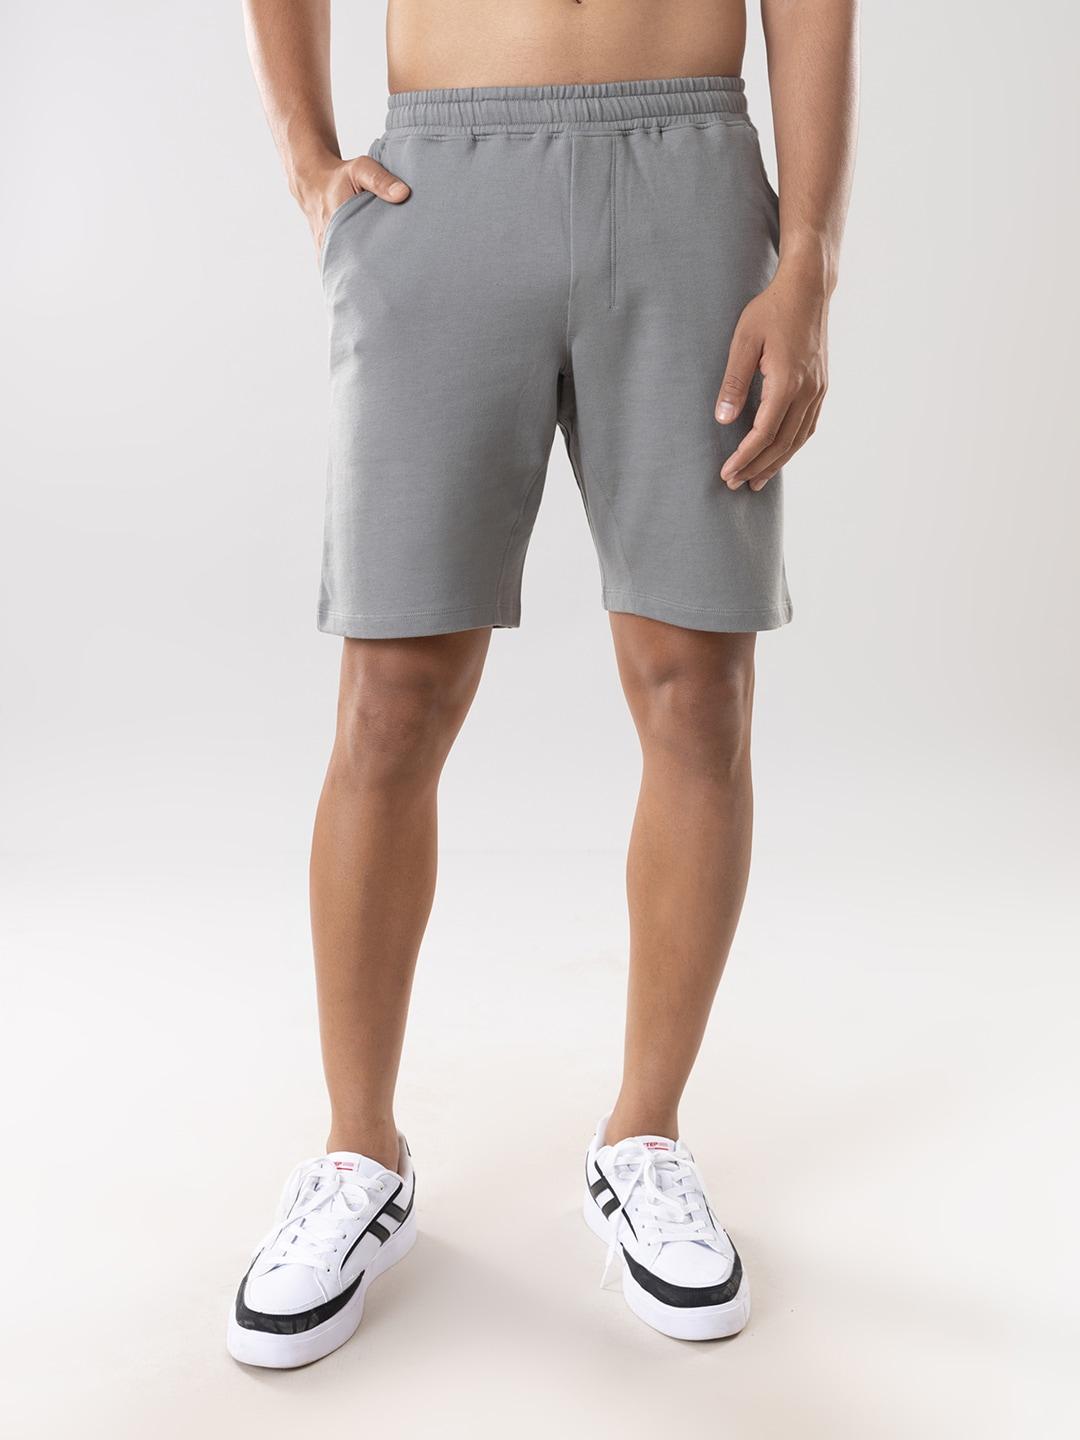 gloot-men-grey-anti-odor-cotton-shorts-with-smart-pocket-&-anti-stain-tech